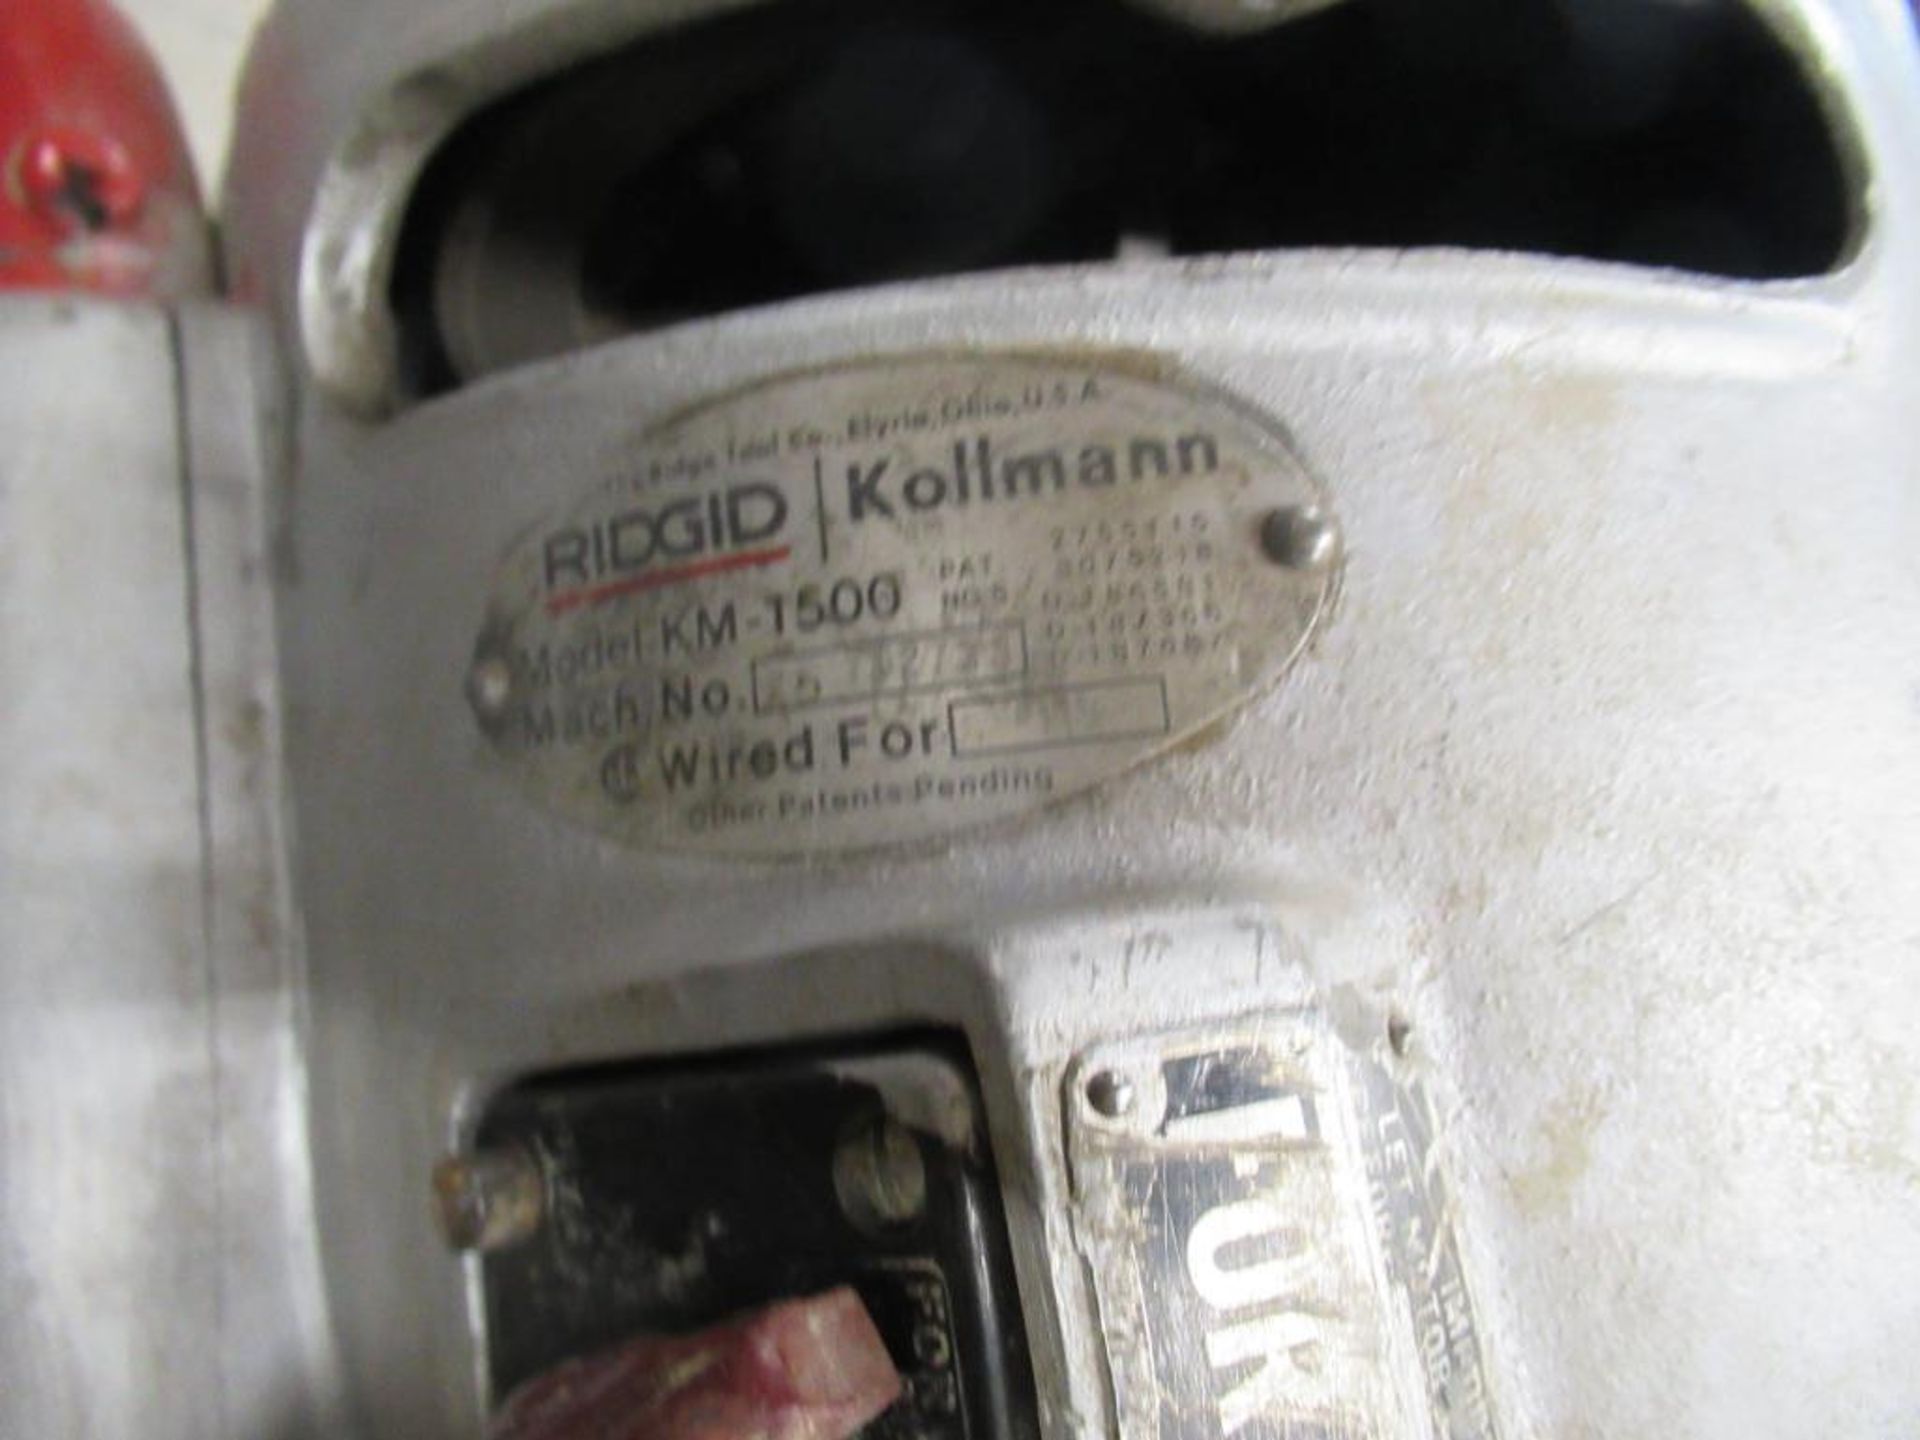 LOT: Ridgid-Kollmann KIM1500 Power Rodder, Rodding Snake, Wire Basket - Image 2 of 4